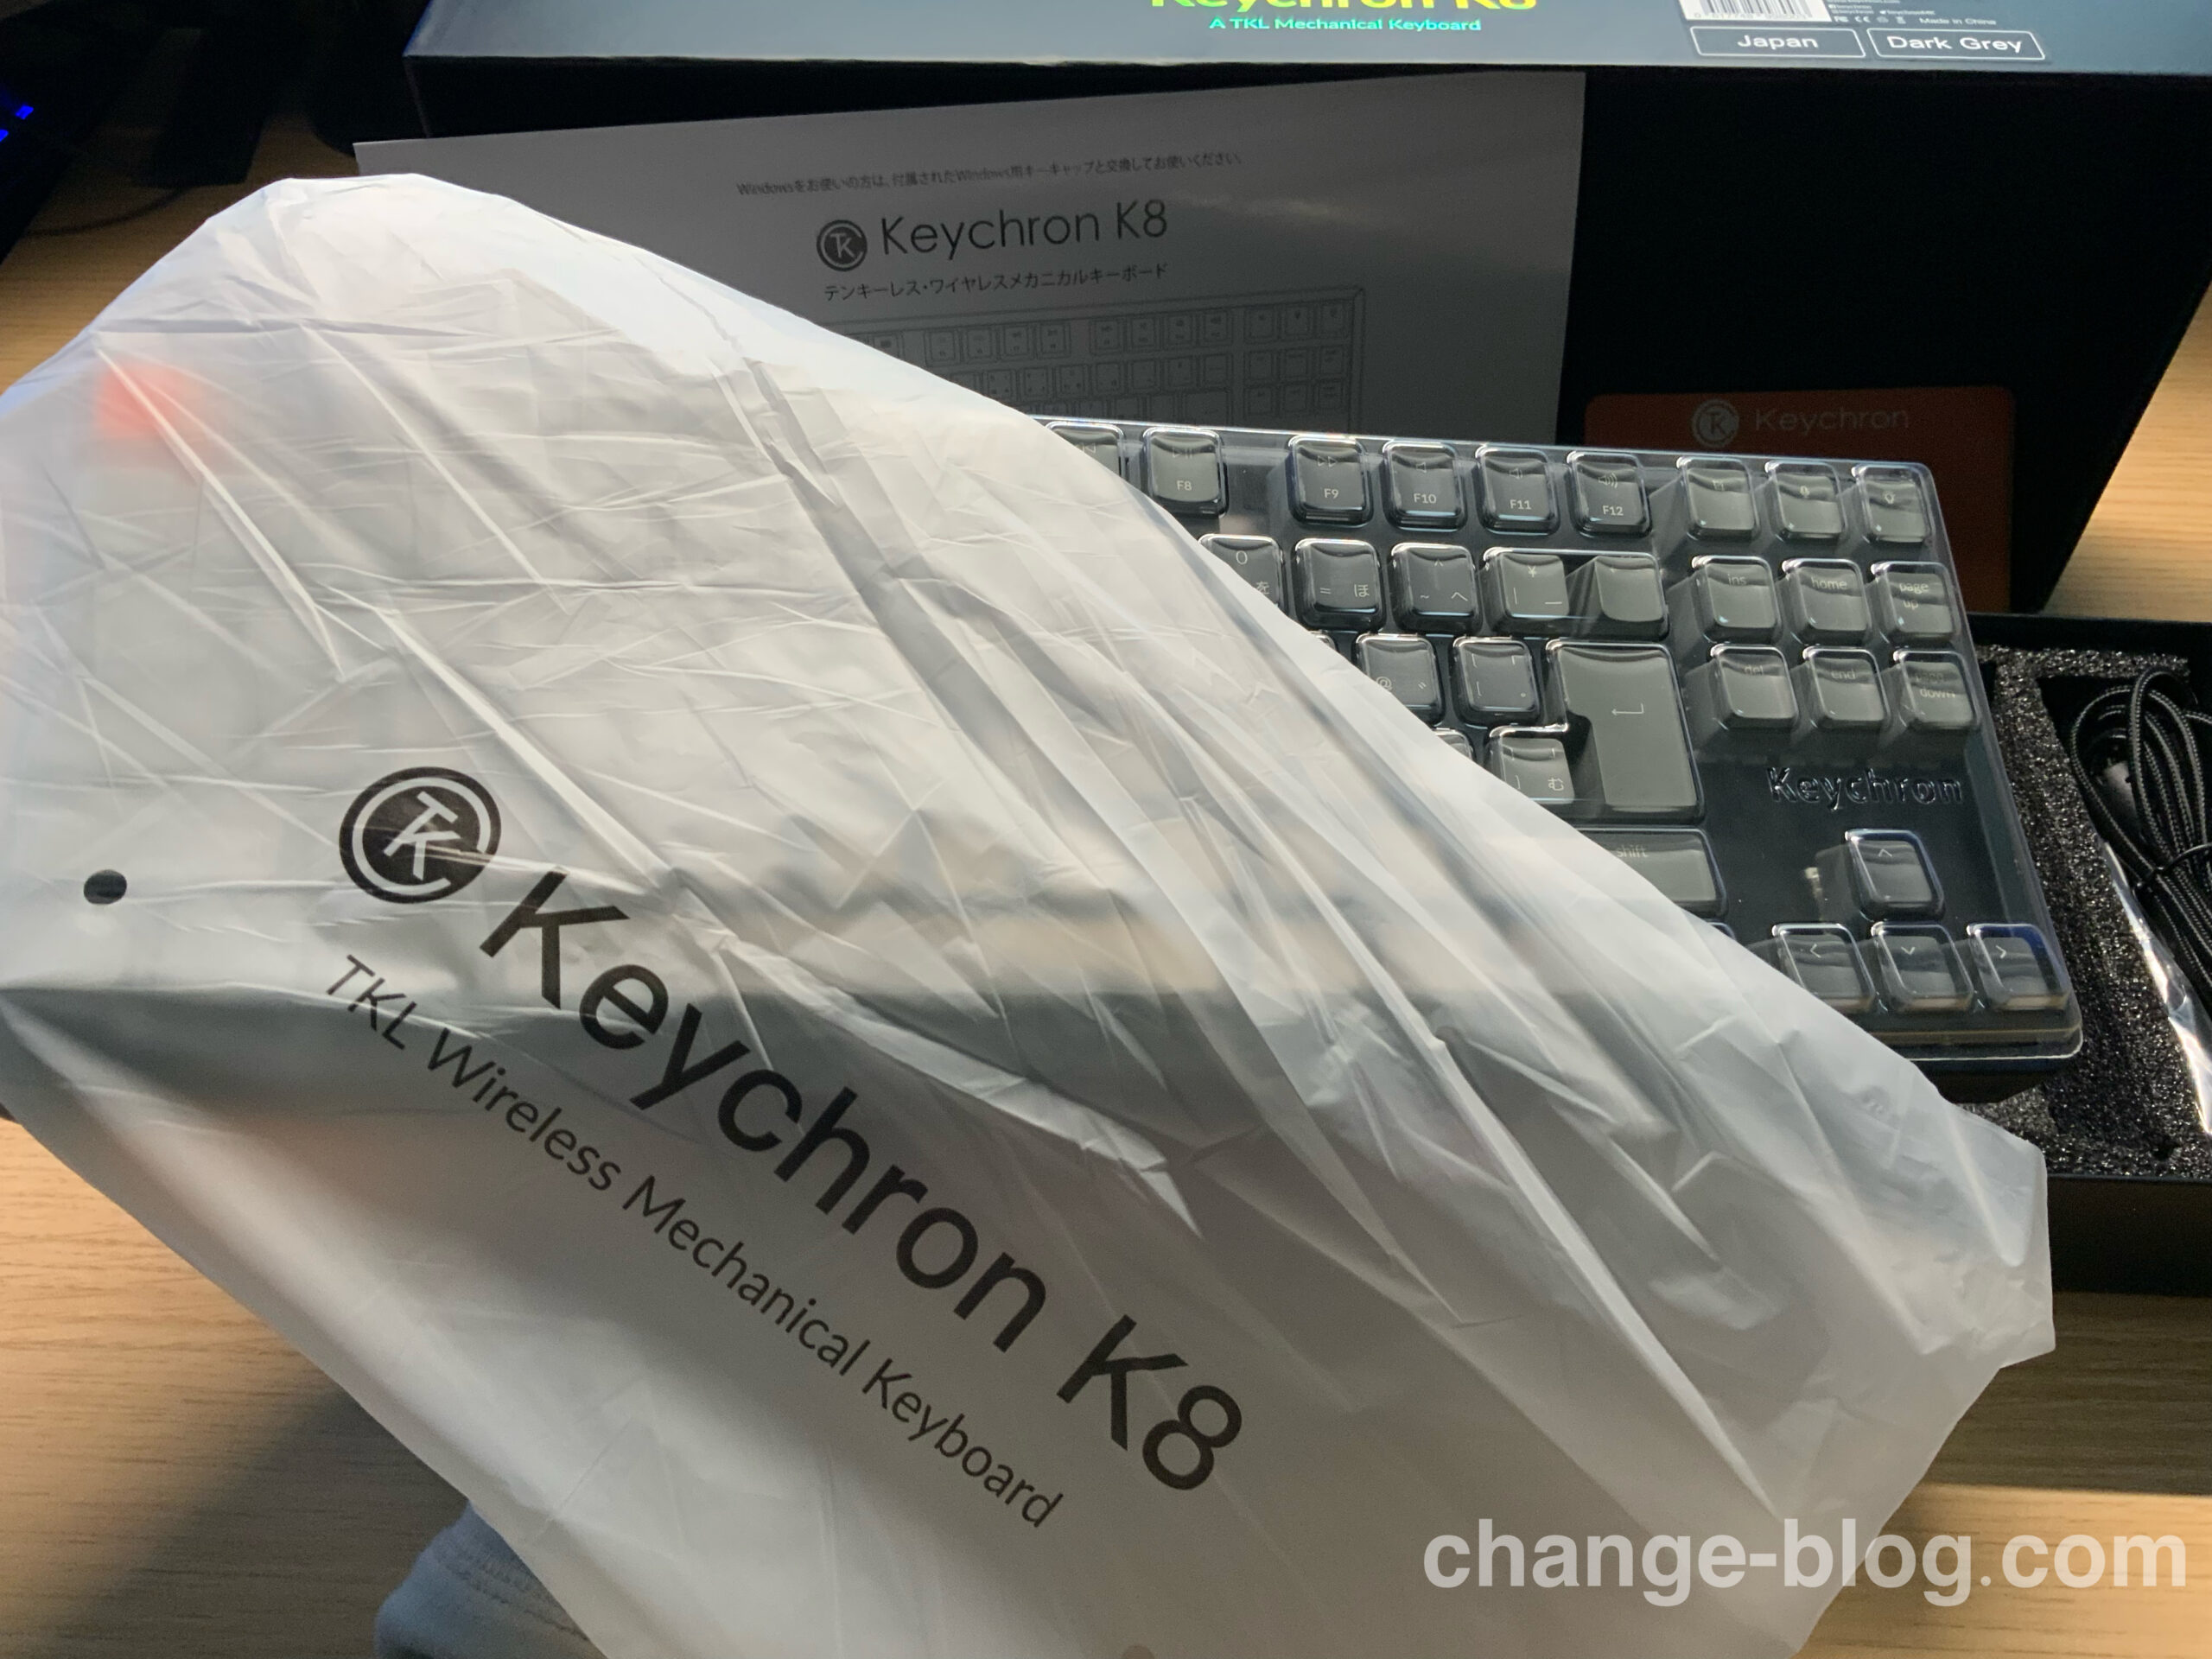 Keychron K8 JIS日本語配列キーボード